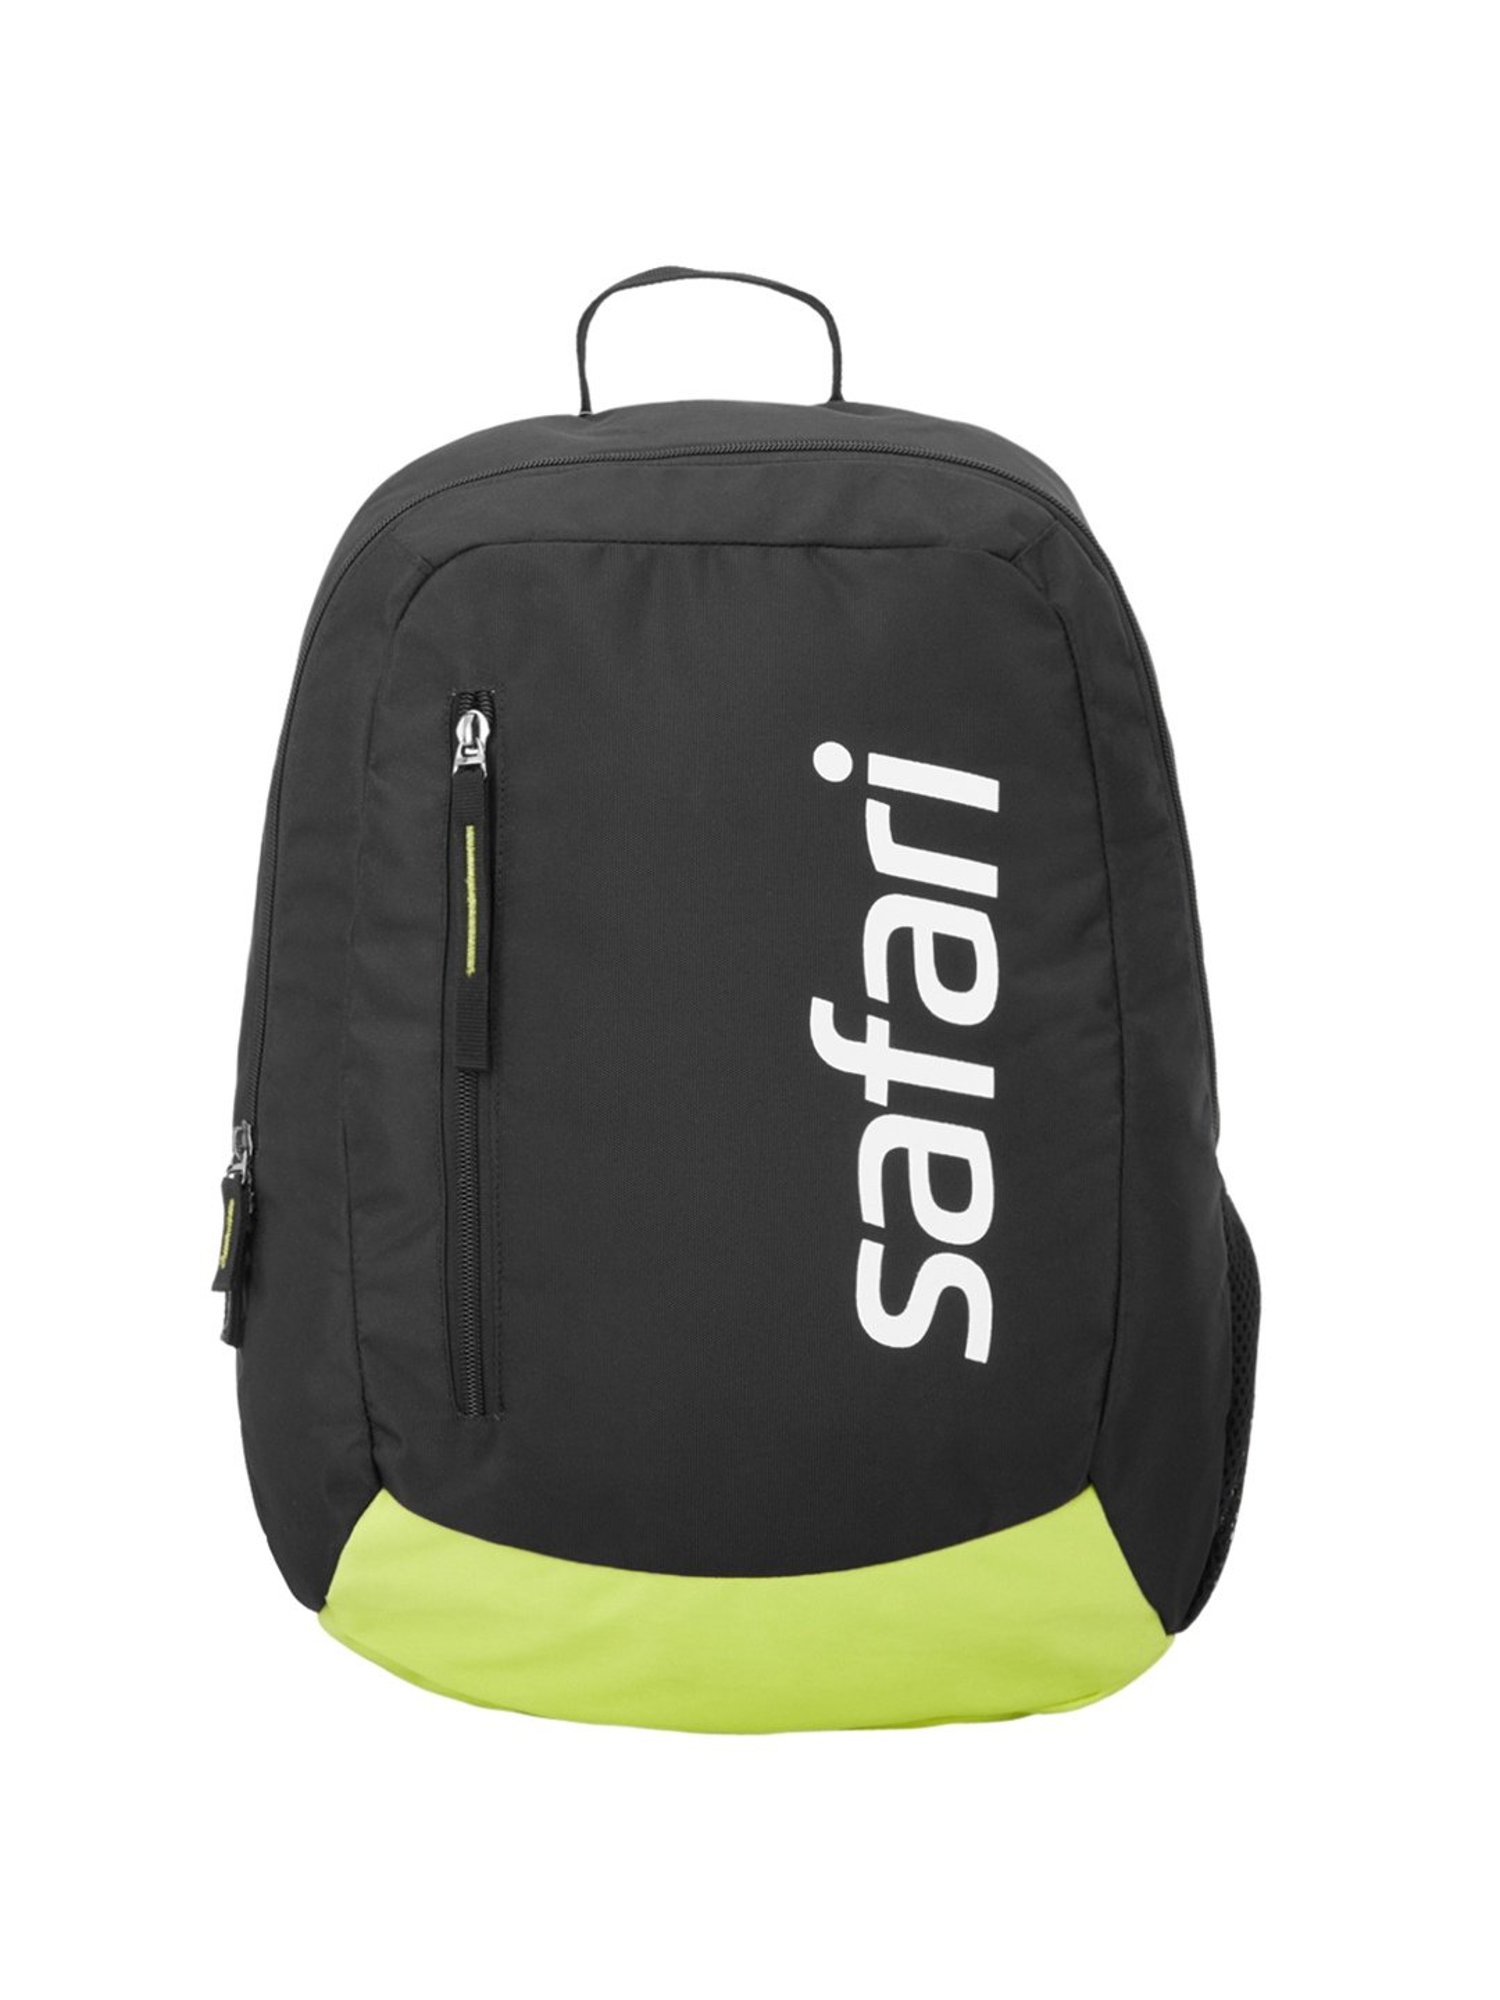 SAFARI ASHPER CB With 6 Pockets 30 L Laptop Backpack Teal - Price in India  | Flipkart.com